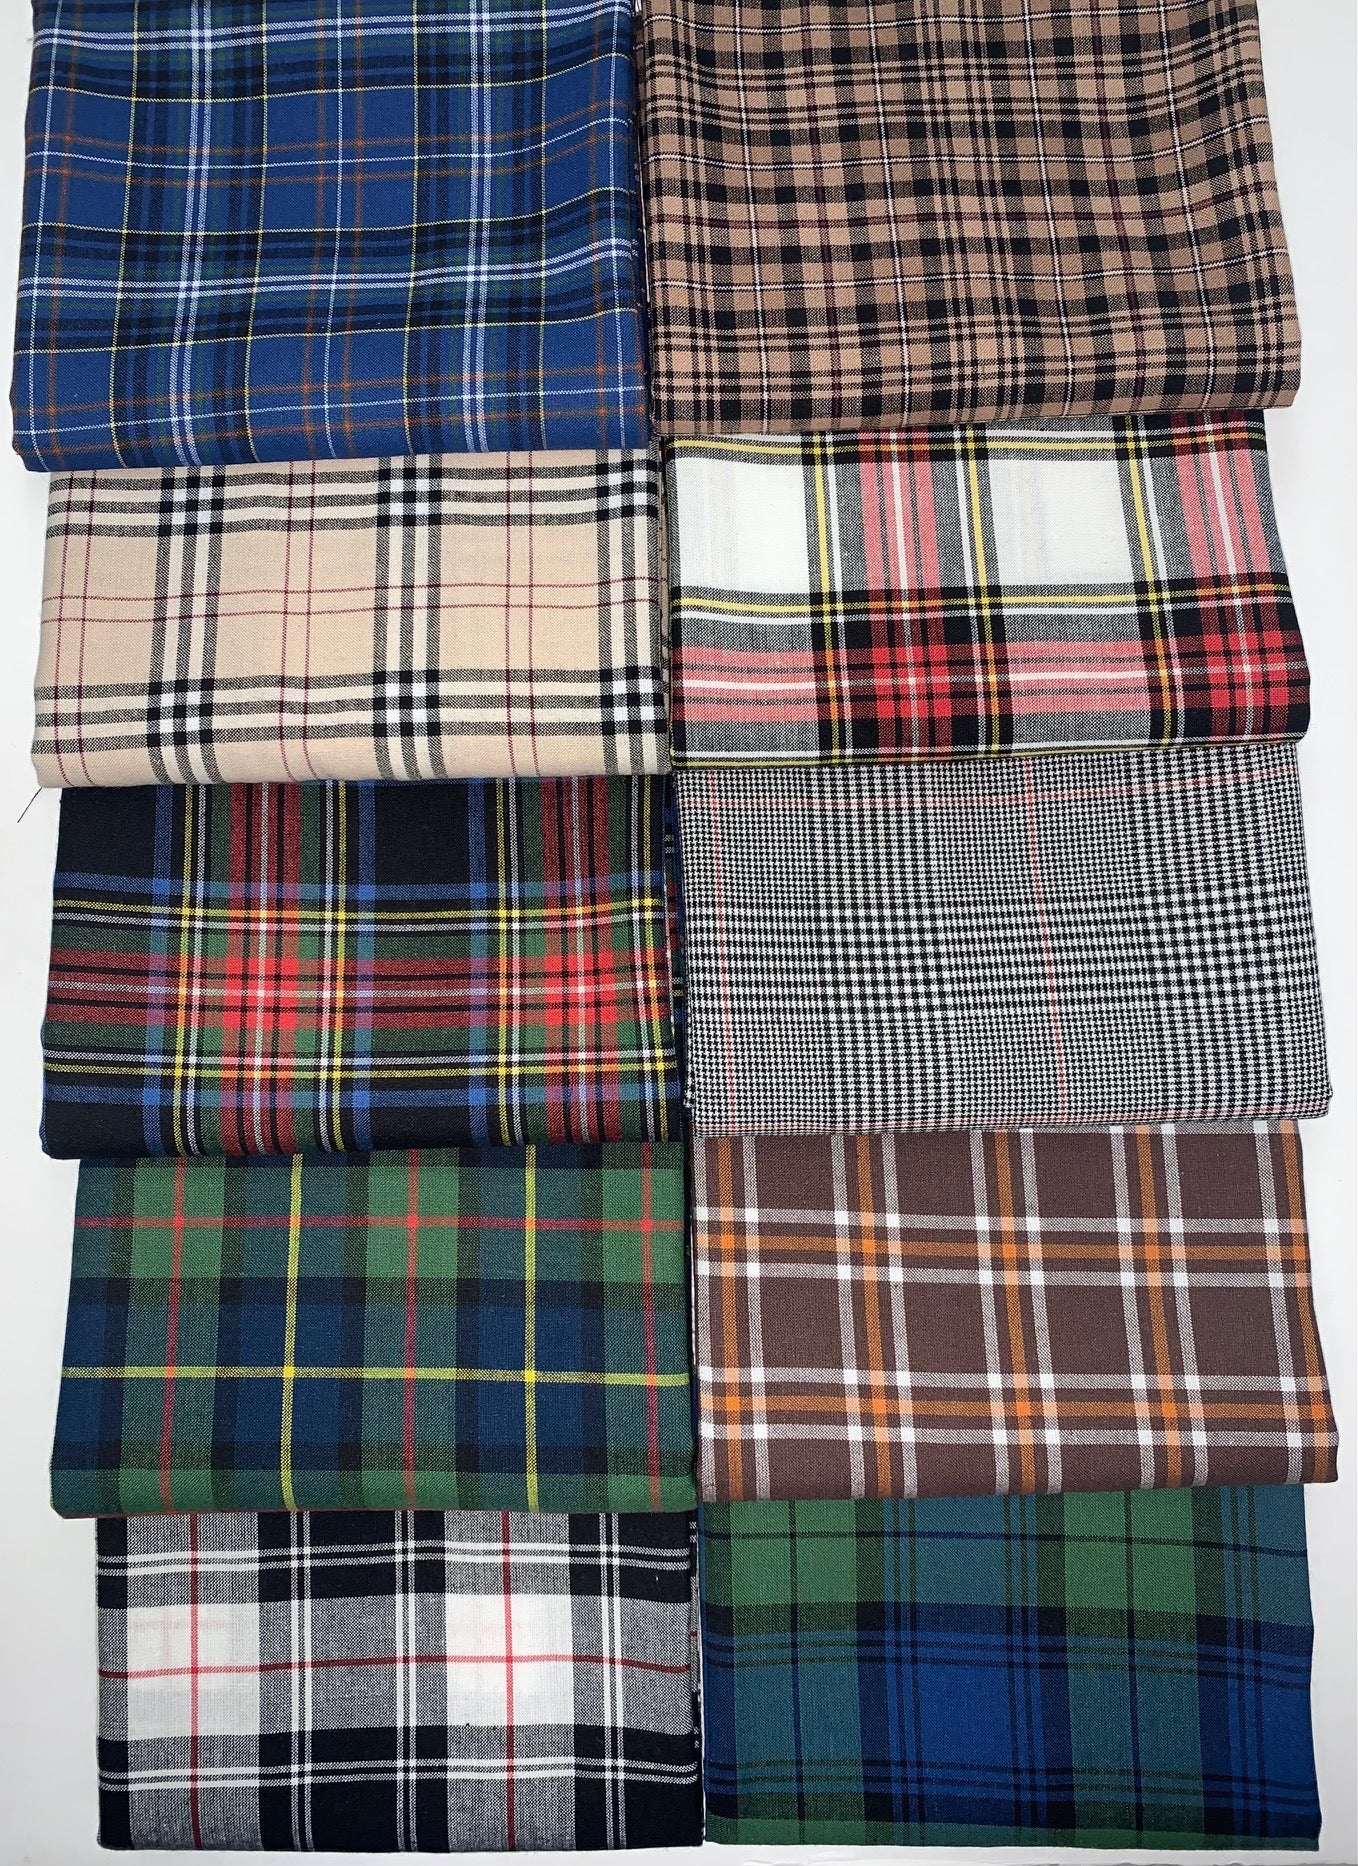 Marcus Fabrics "Yarn Dyes - Classic Plaids: Outland Tartans" (Col. 2) Half-yard Bundle - 10 Fabrics, 5 Total Yards